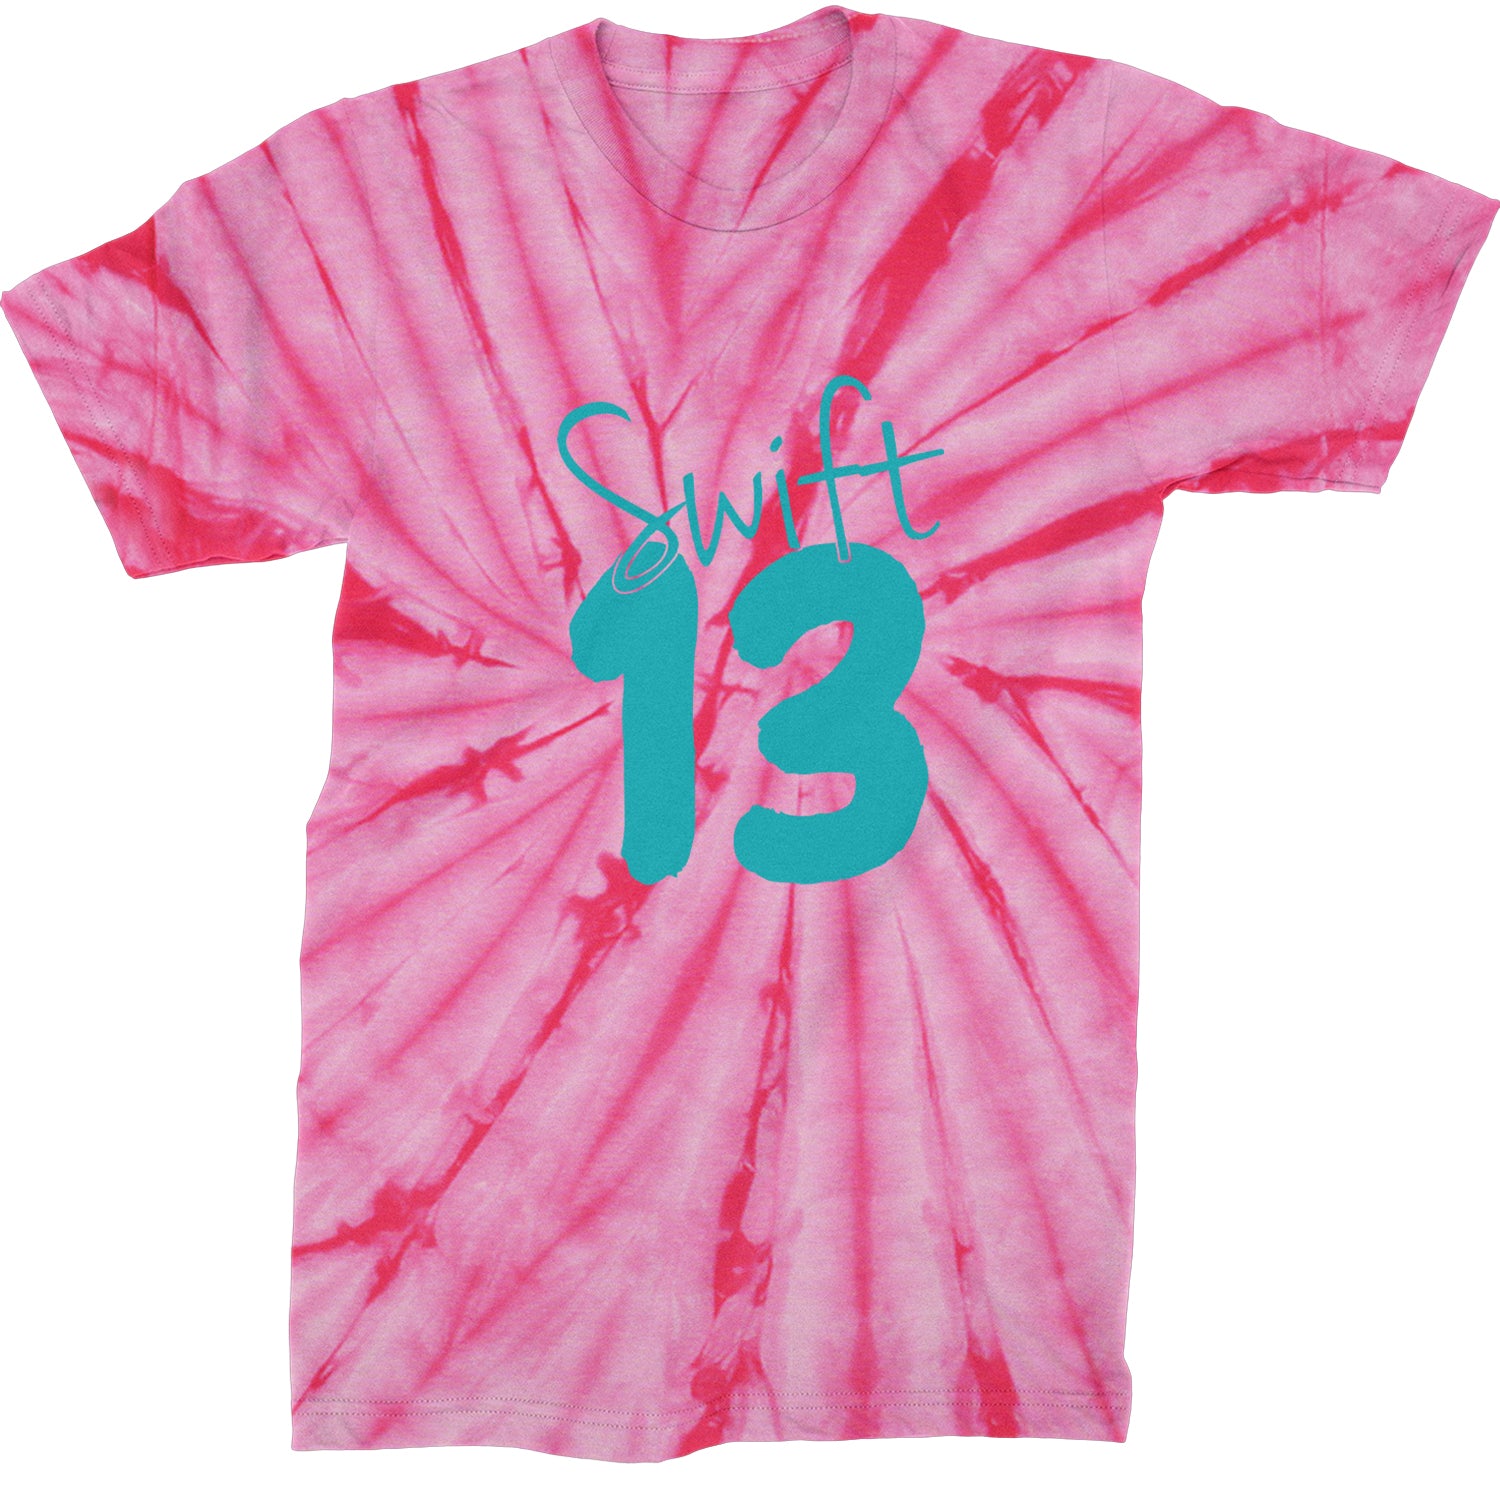 13 Swift 13 Lucky Number Era TTPD Mens T-shirt Tie-Dye Spider Pink